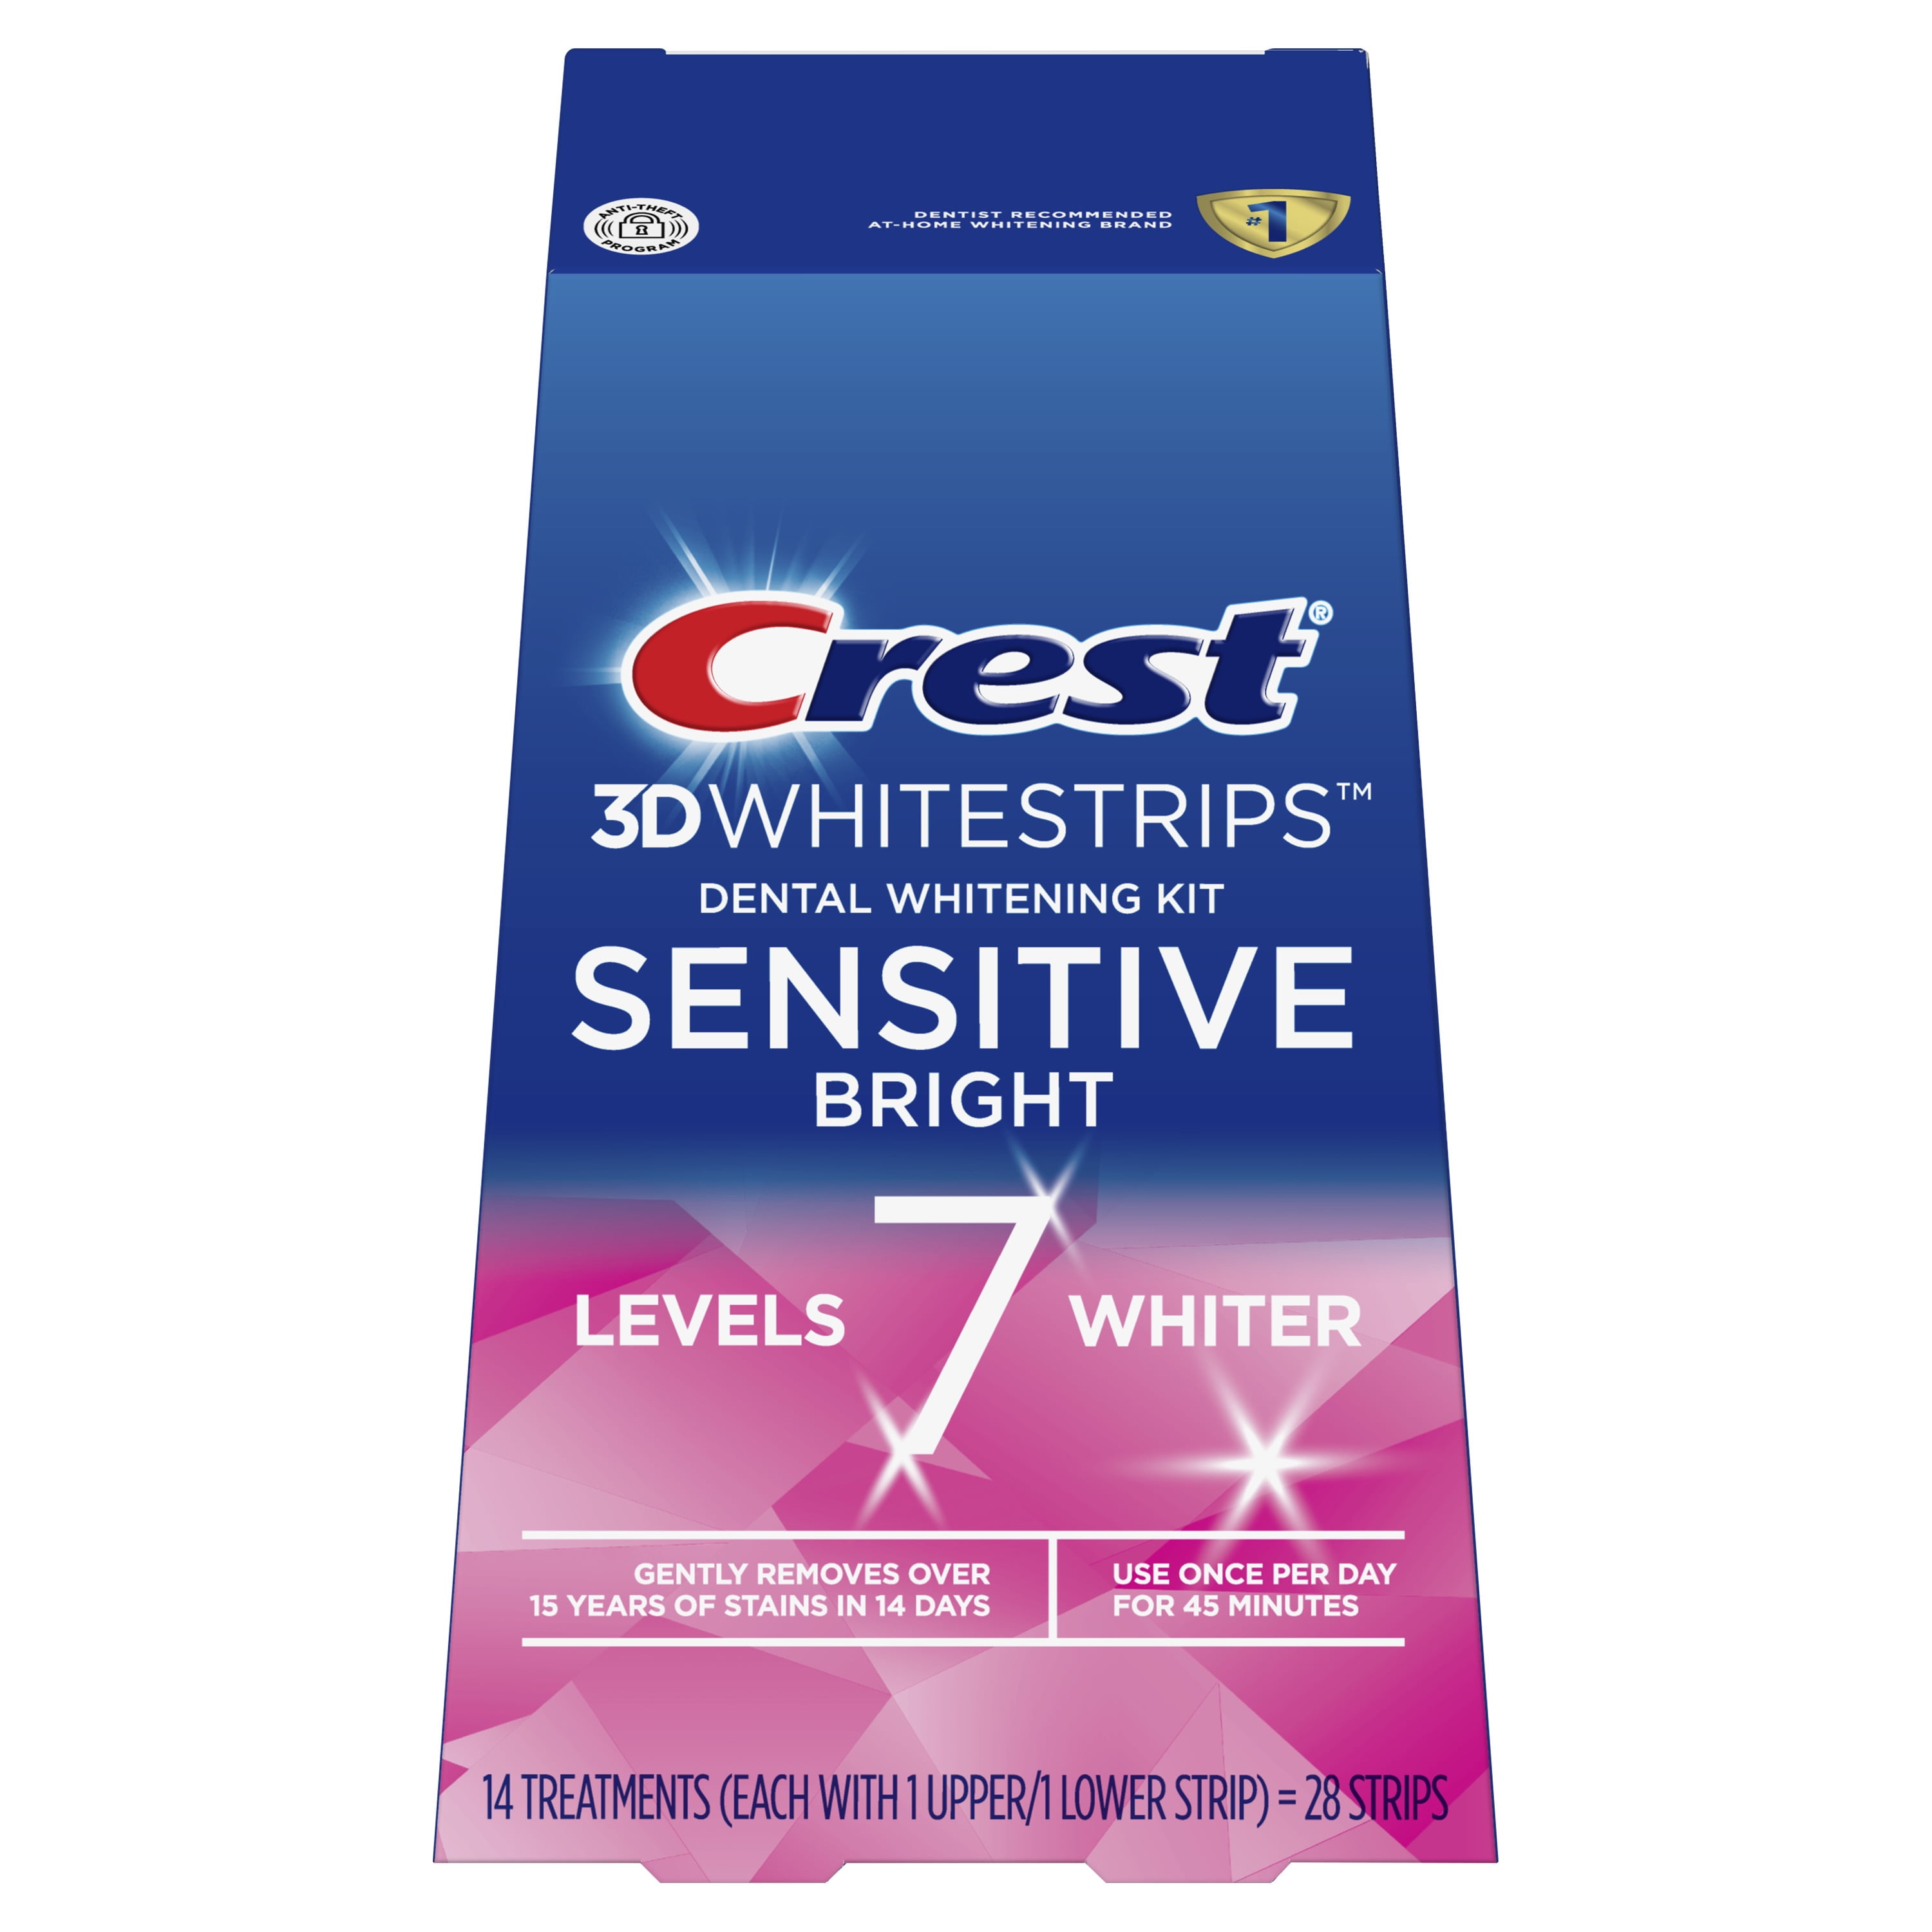 Crest 3DWhitestrips Sensitive Bright At-home Teeth Whitening Kit, 14 Treatments